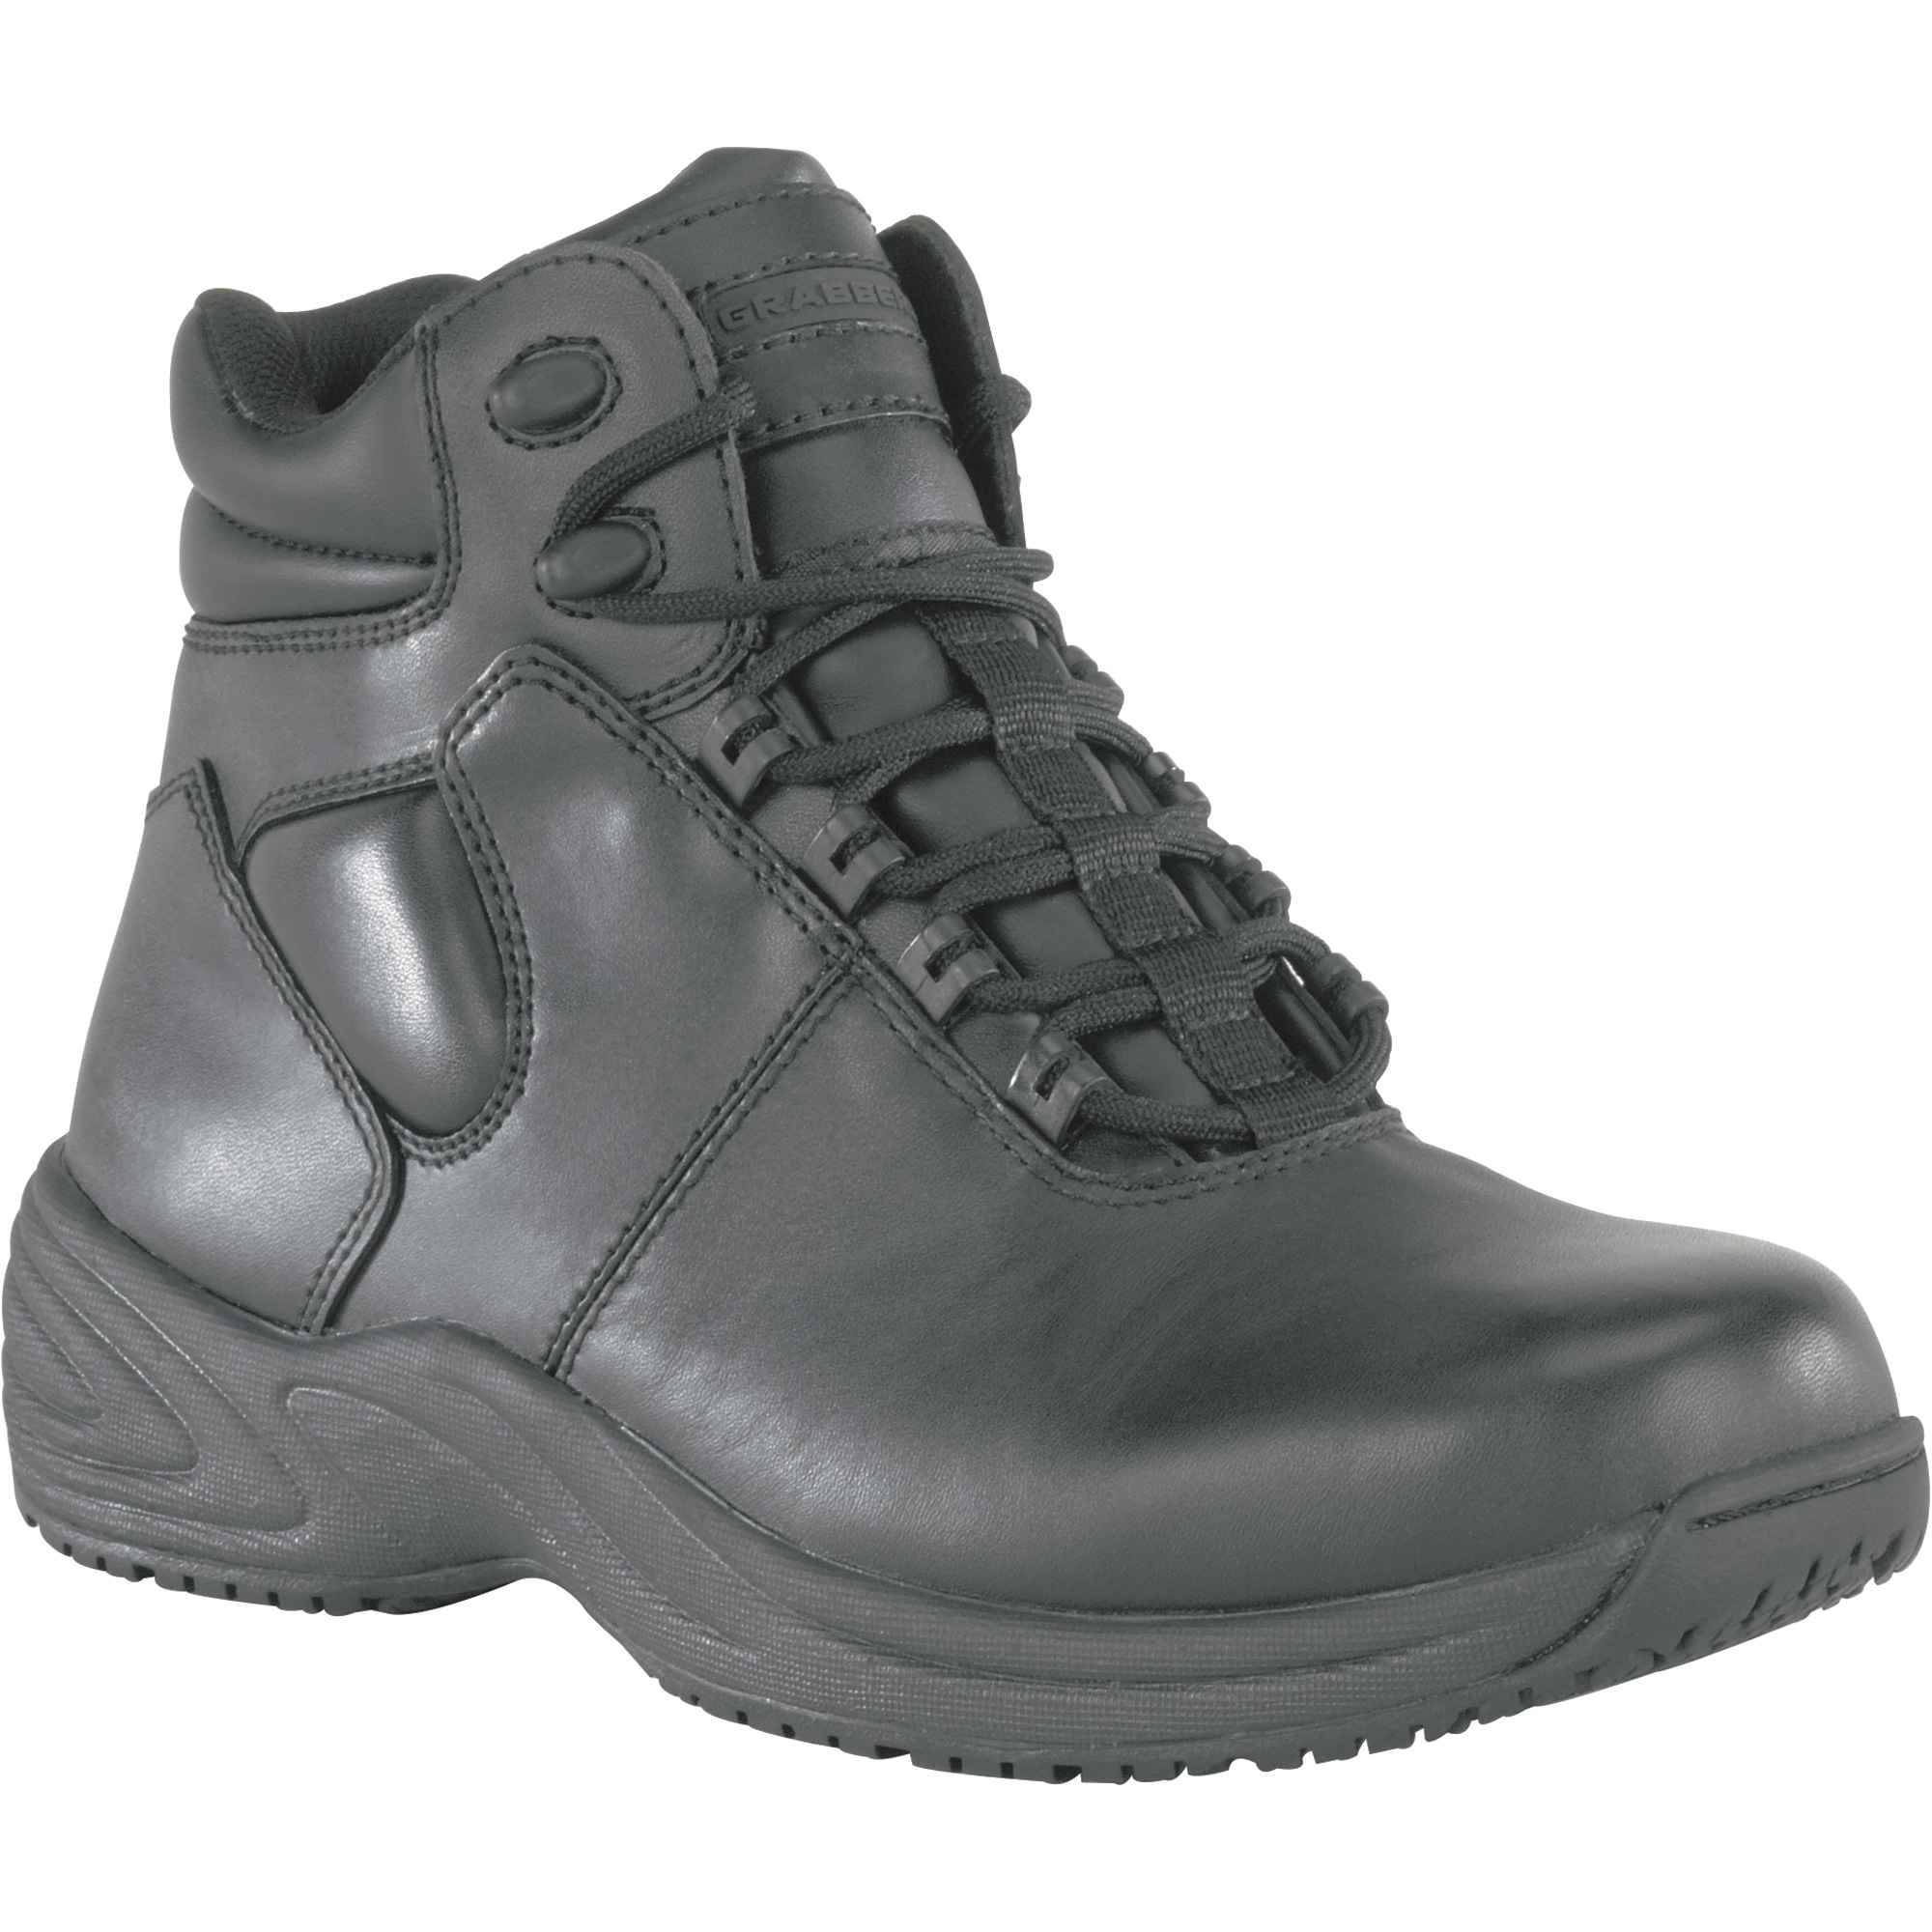 Grabbers Men's 6Inch Fastener Work Boots - Black, Size 10 1/2, Model G1240